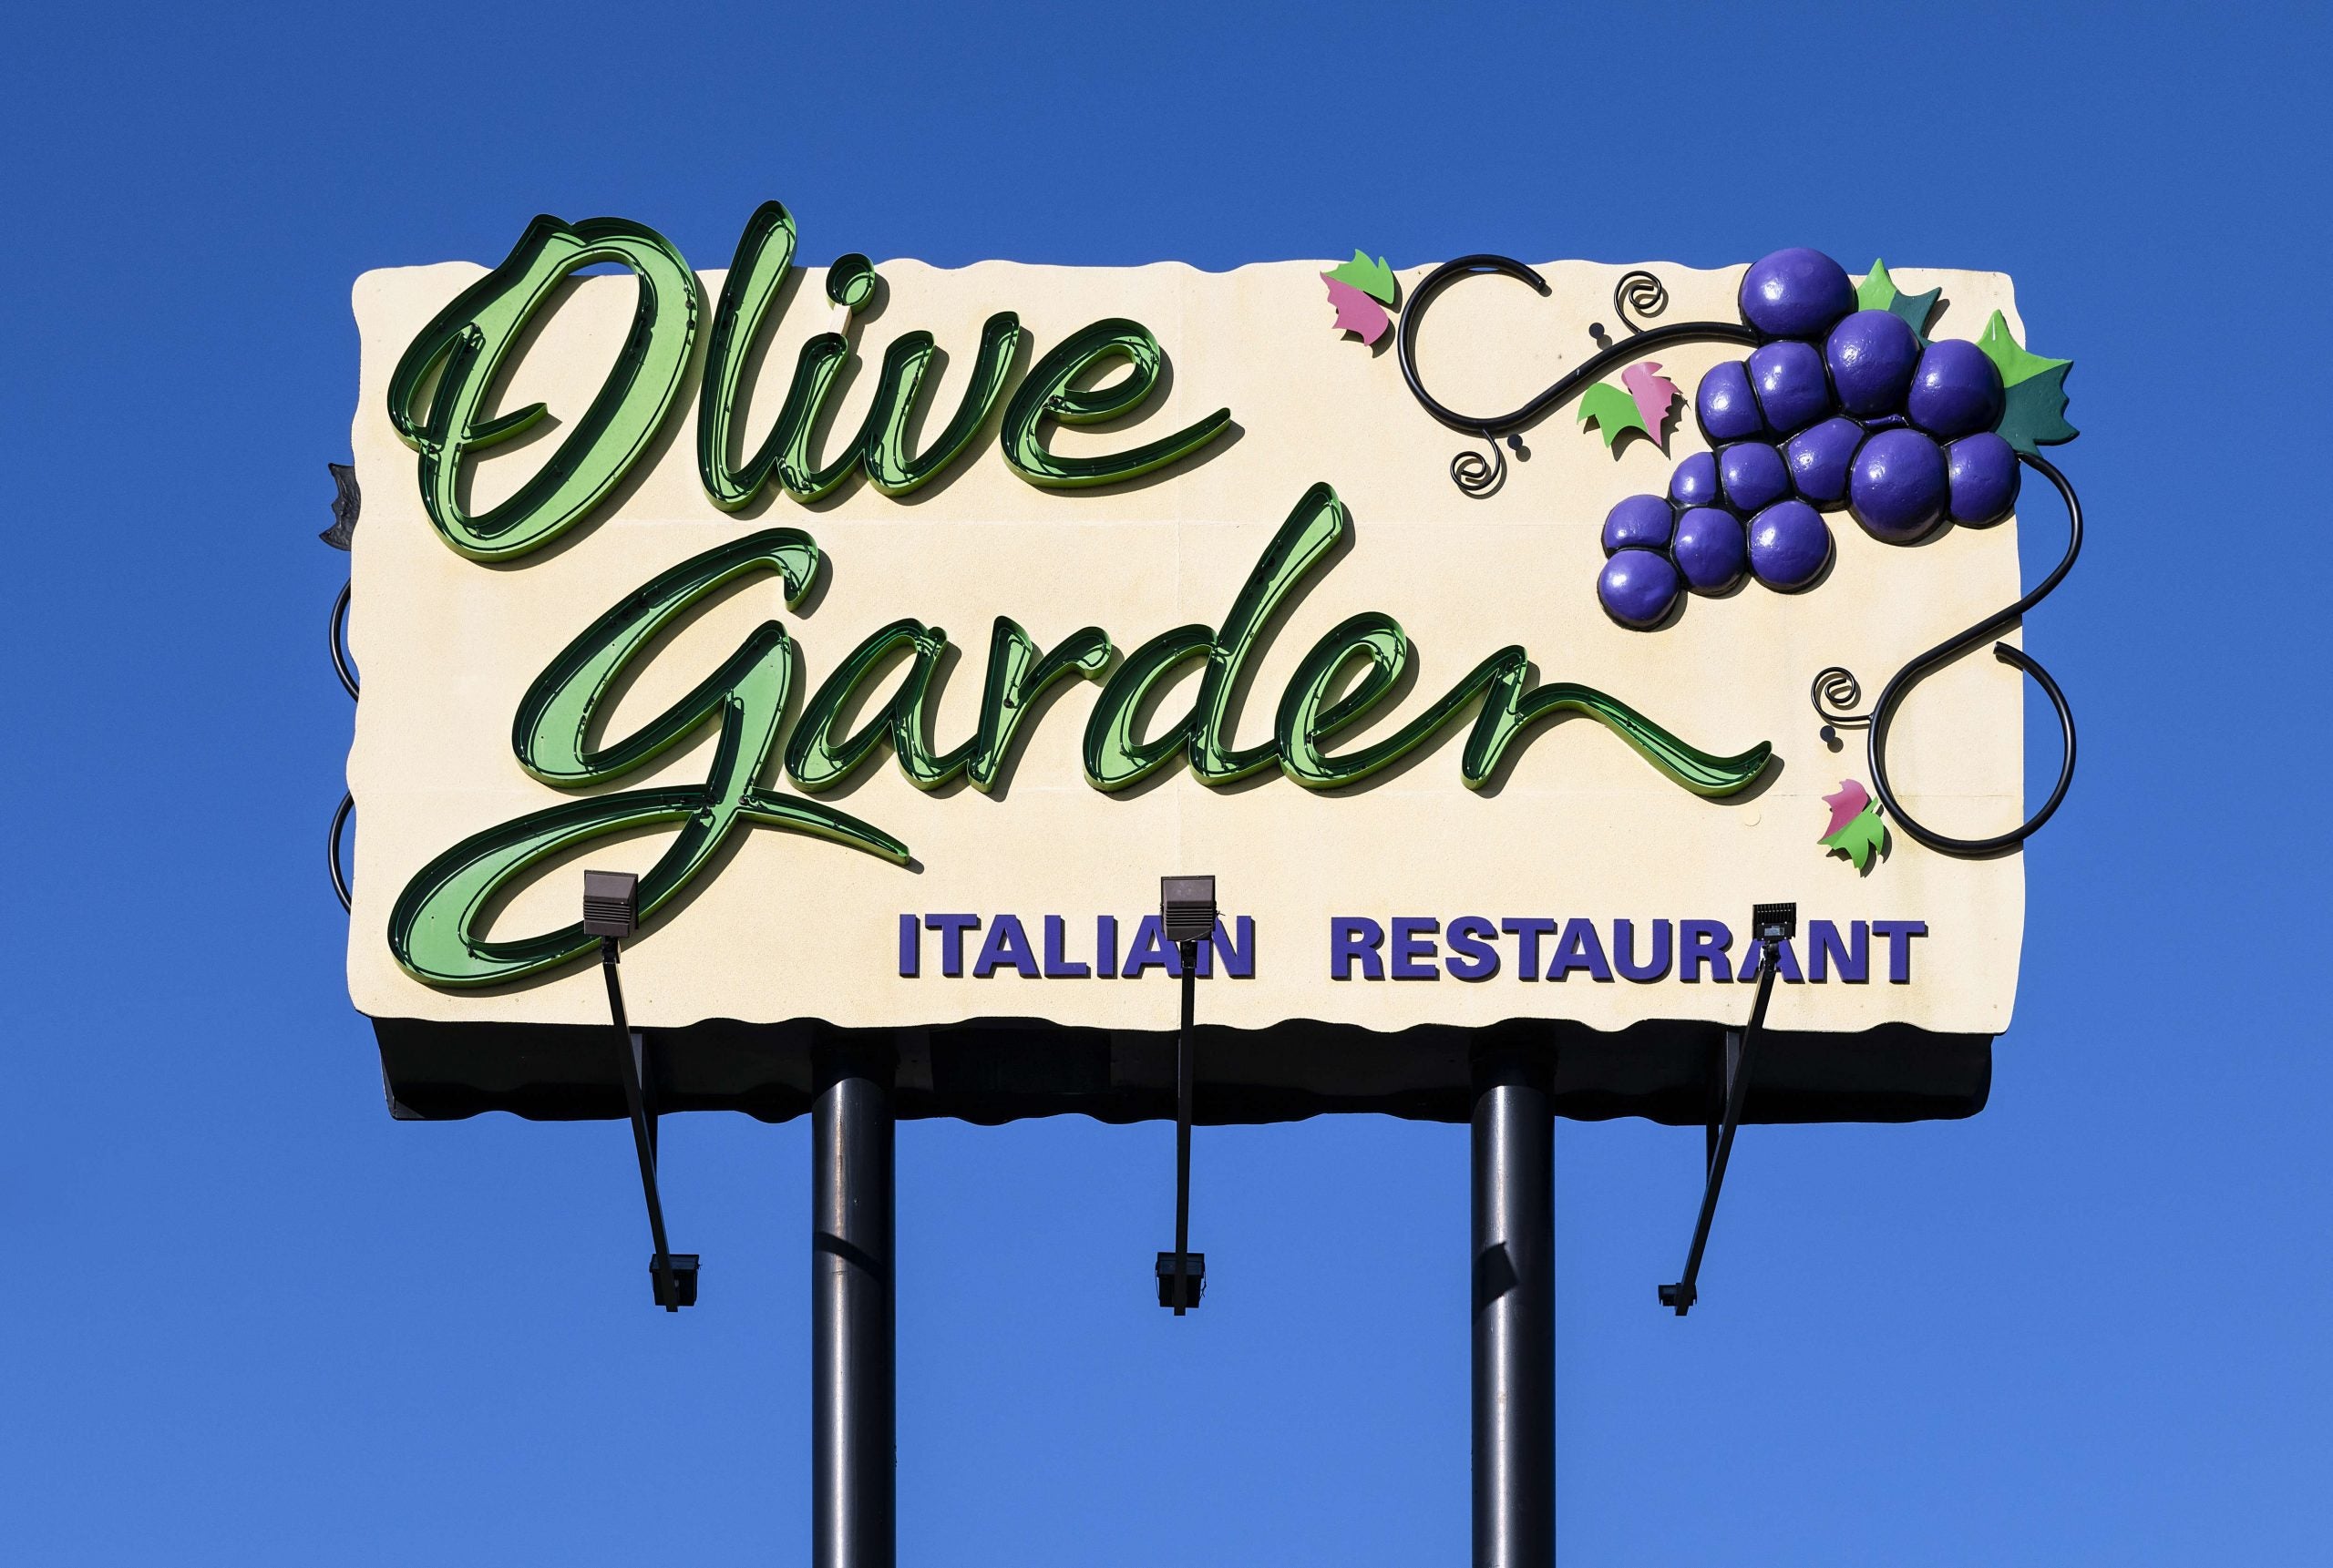 Olive Garden Employee To File Lawsuit After Customer Demanded Non-Black Server